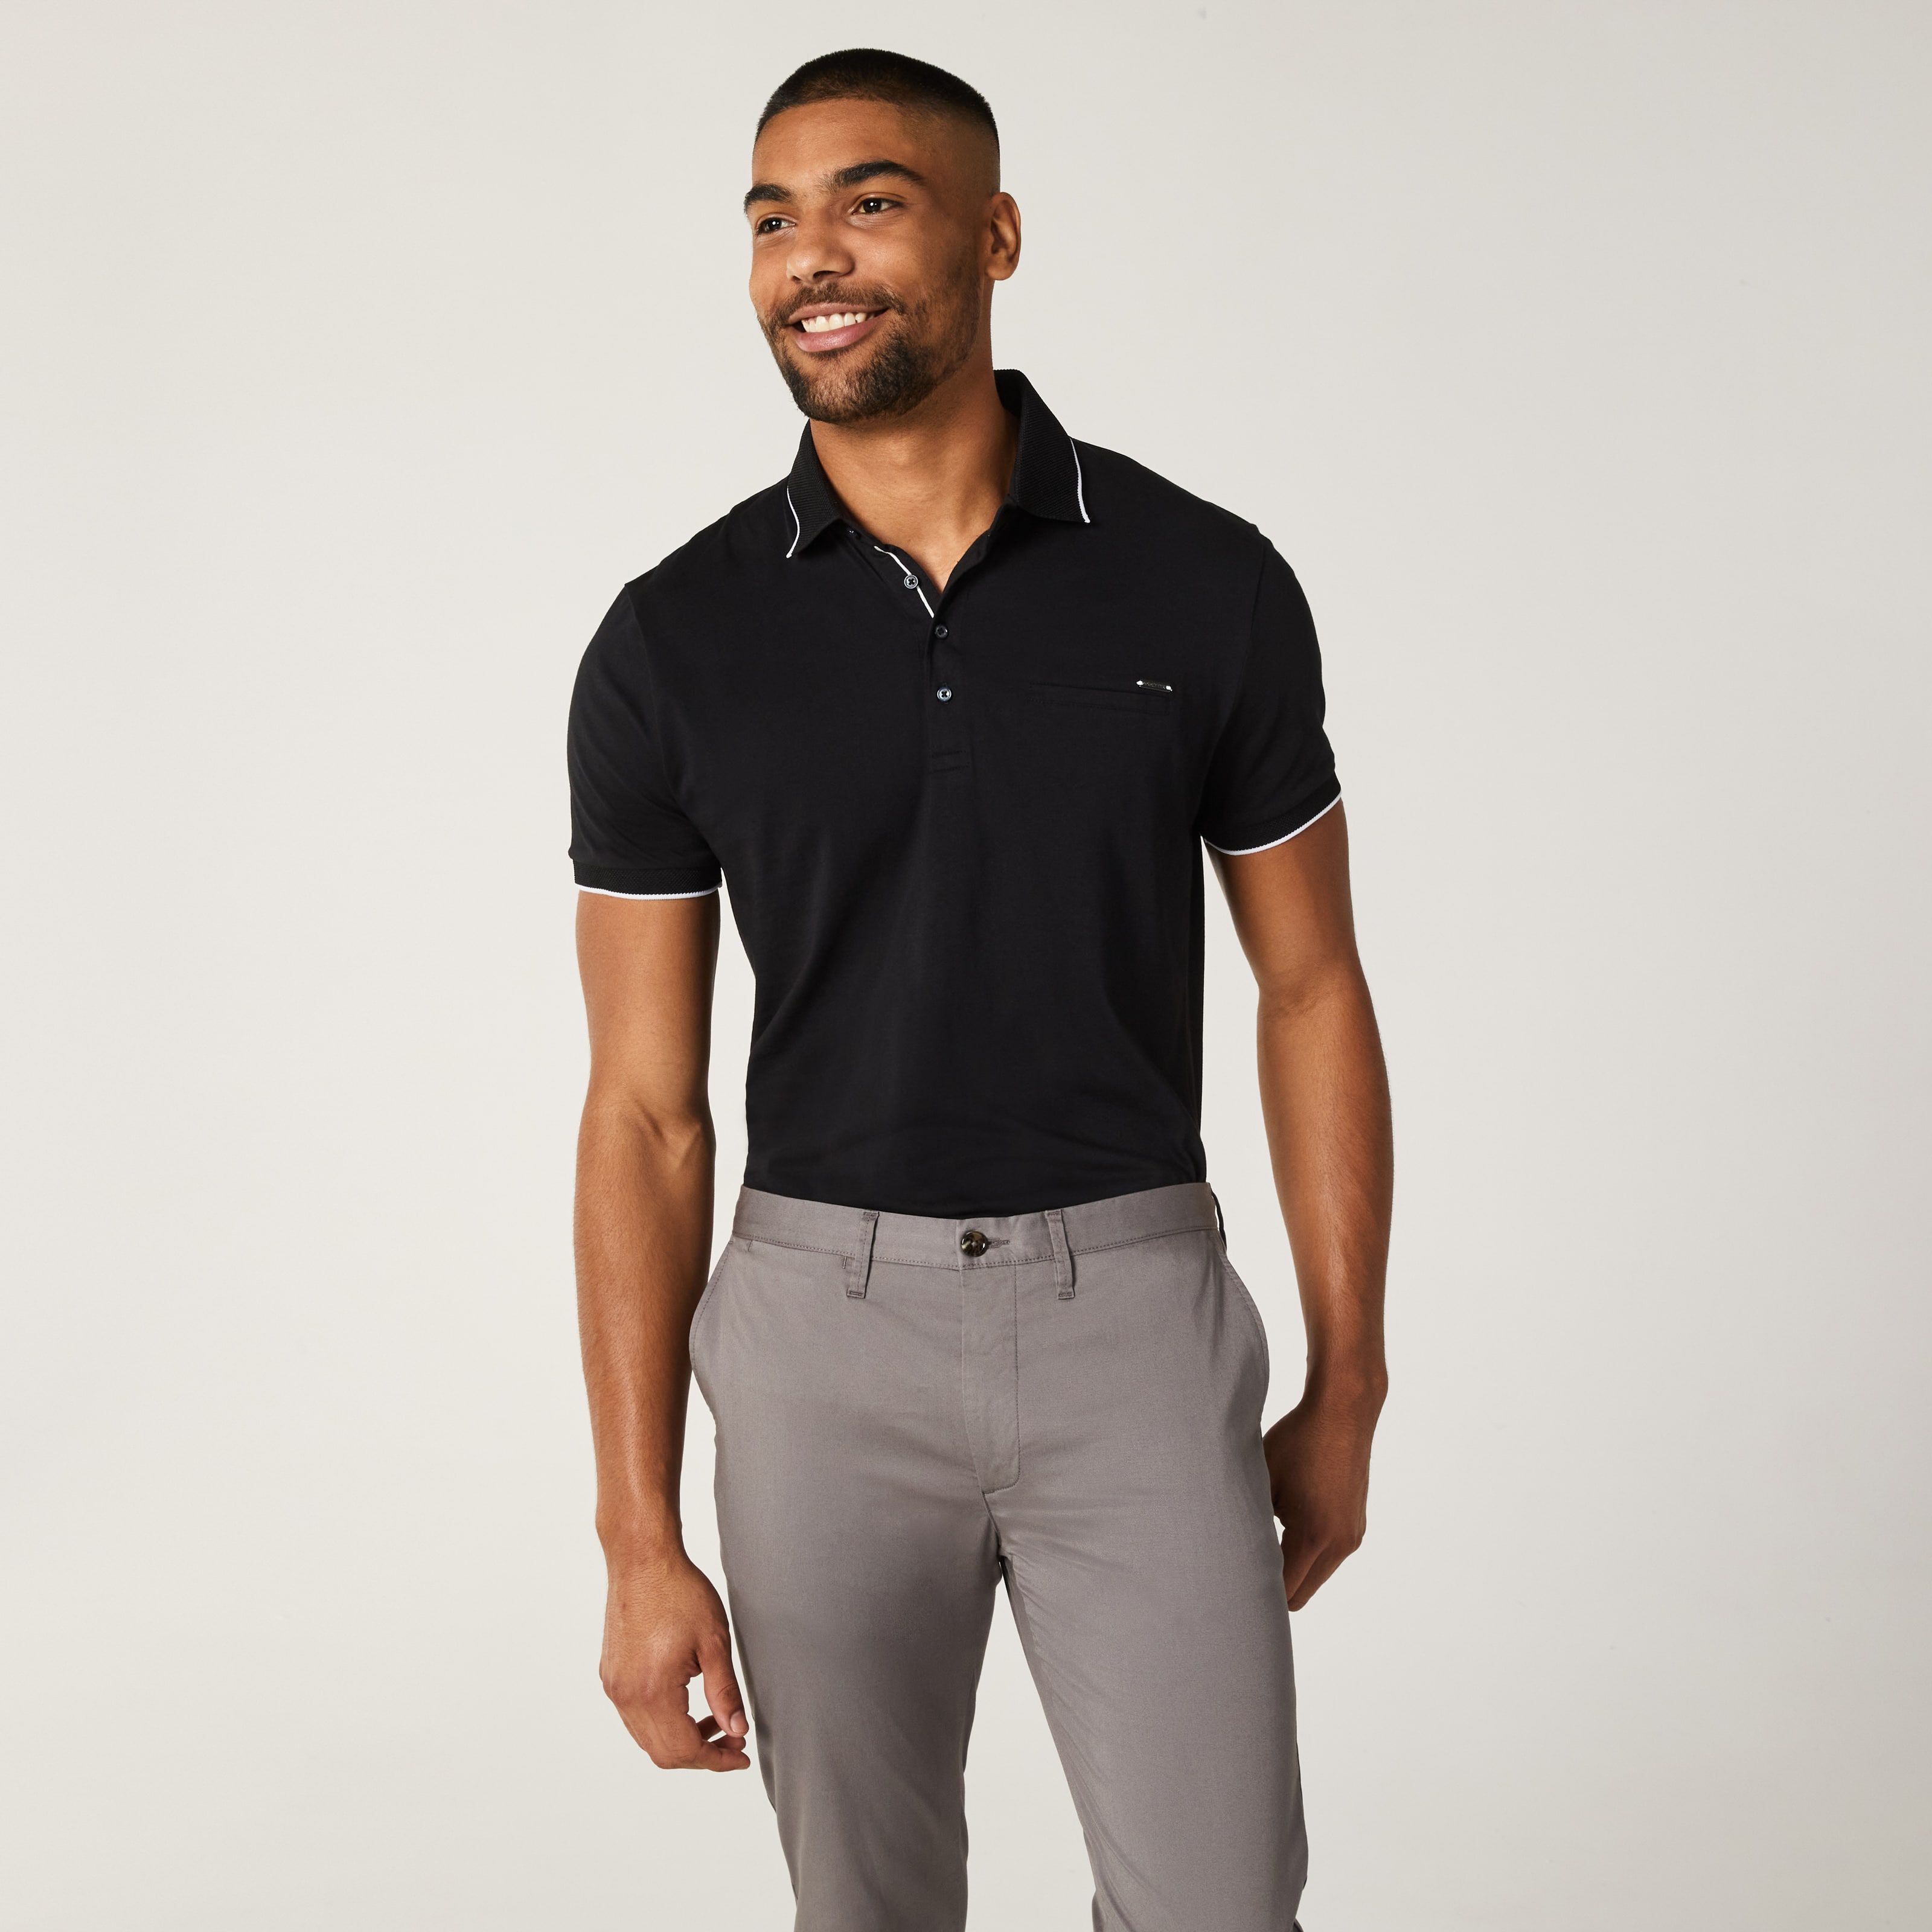 Men's Polo T Shirt - Buy Polo Tshirts Online for Men | Westside